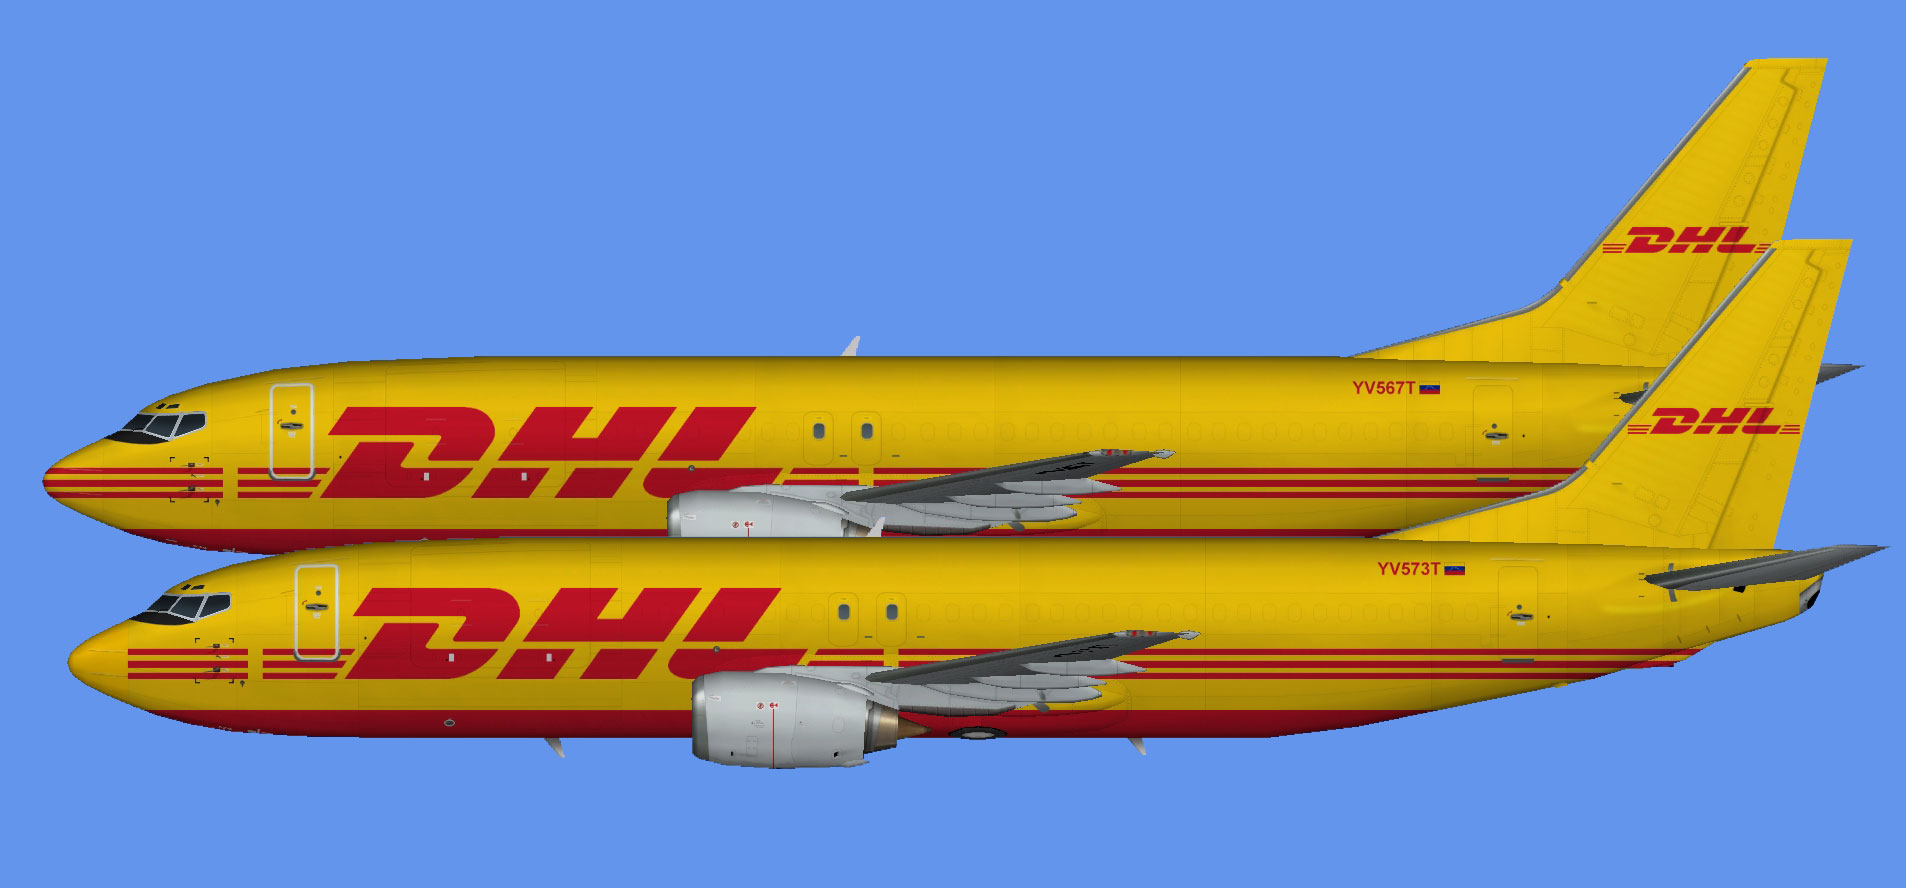 Vensecar Boeing 737-400